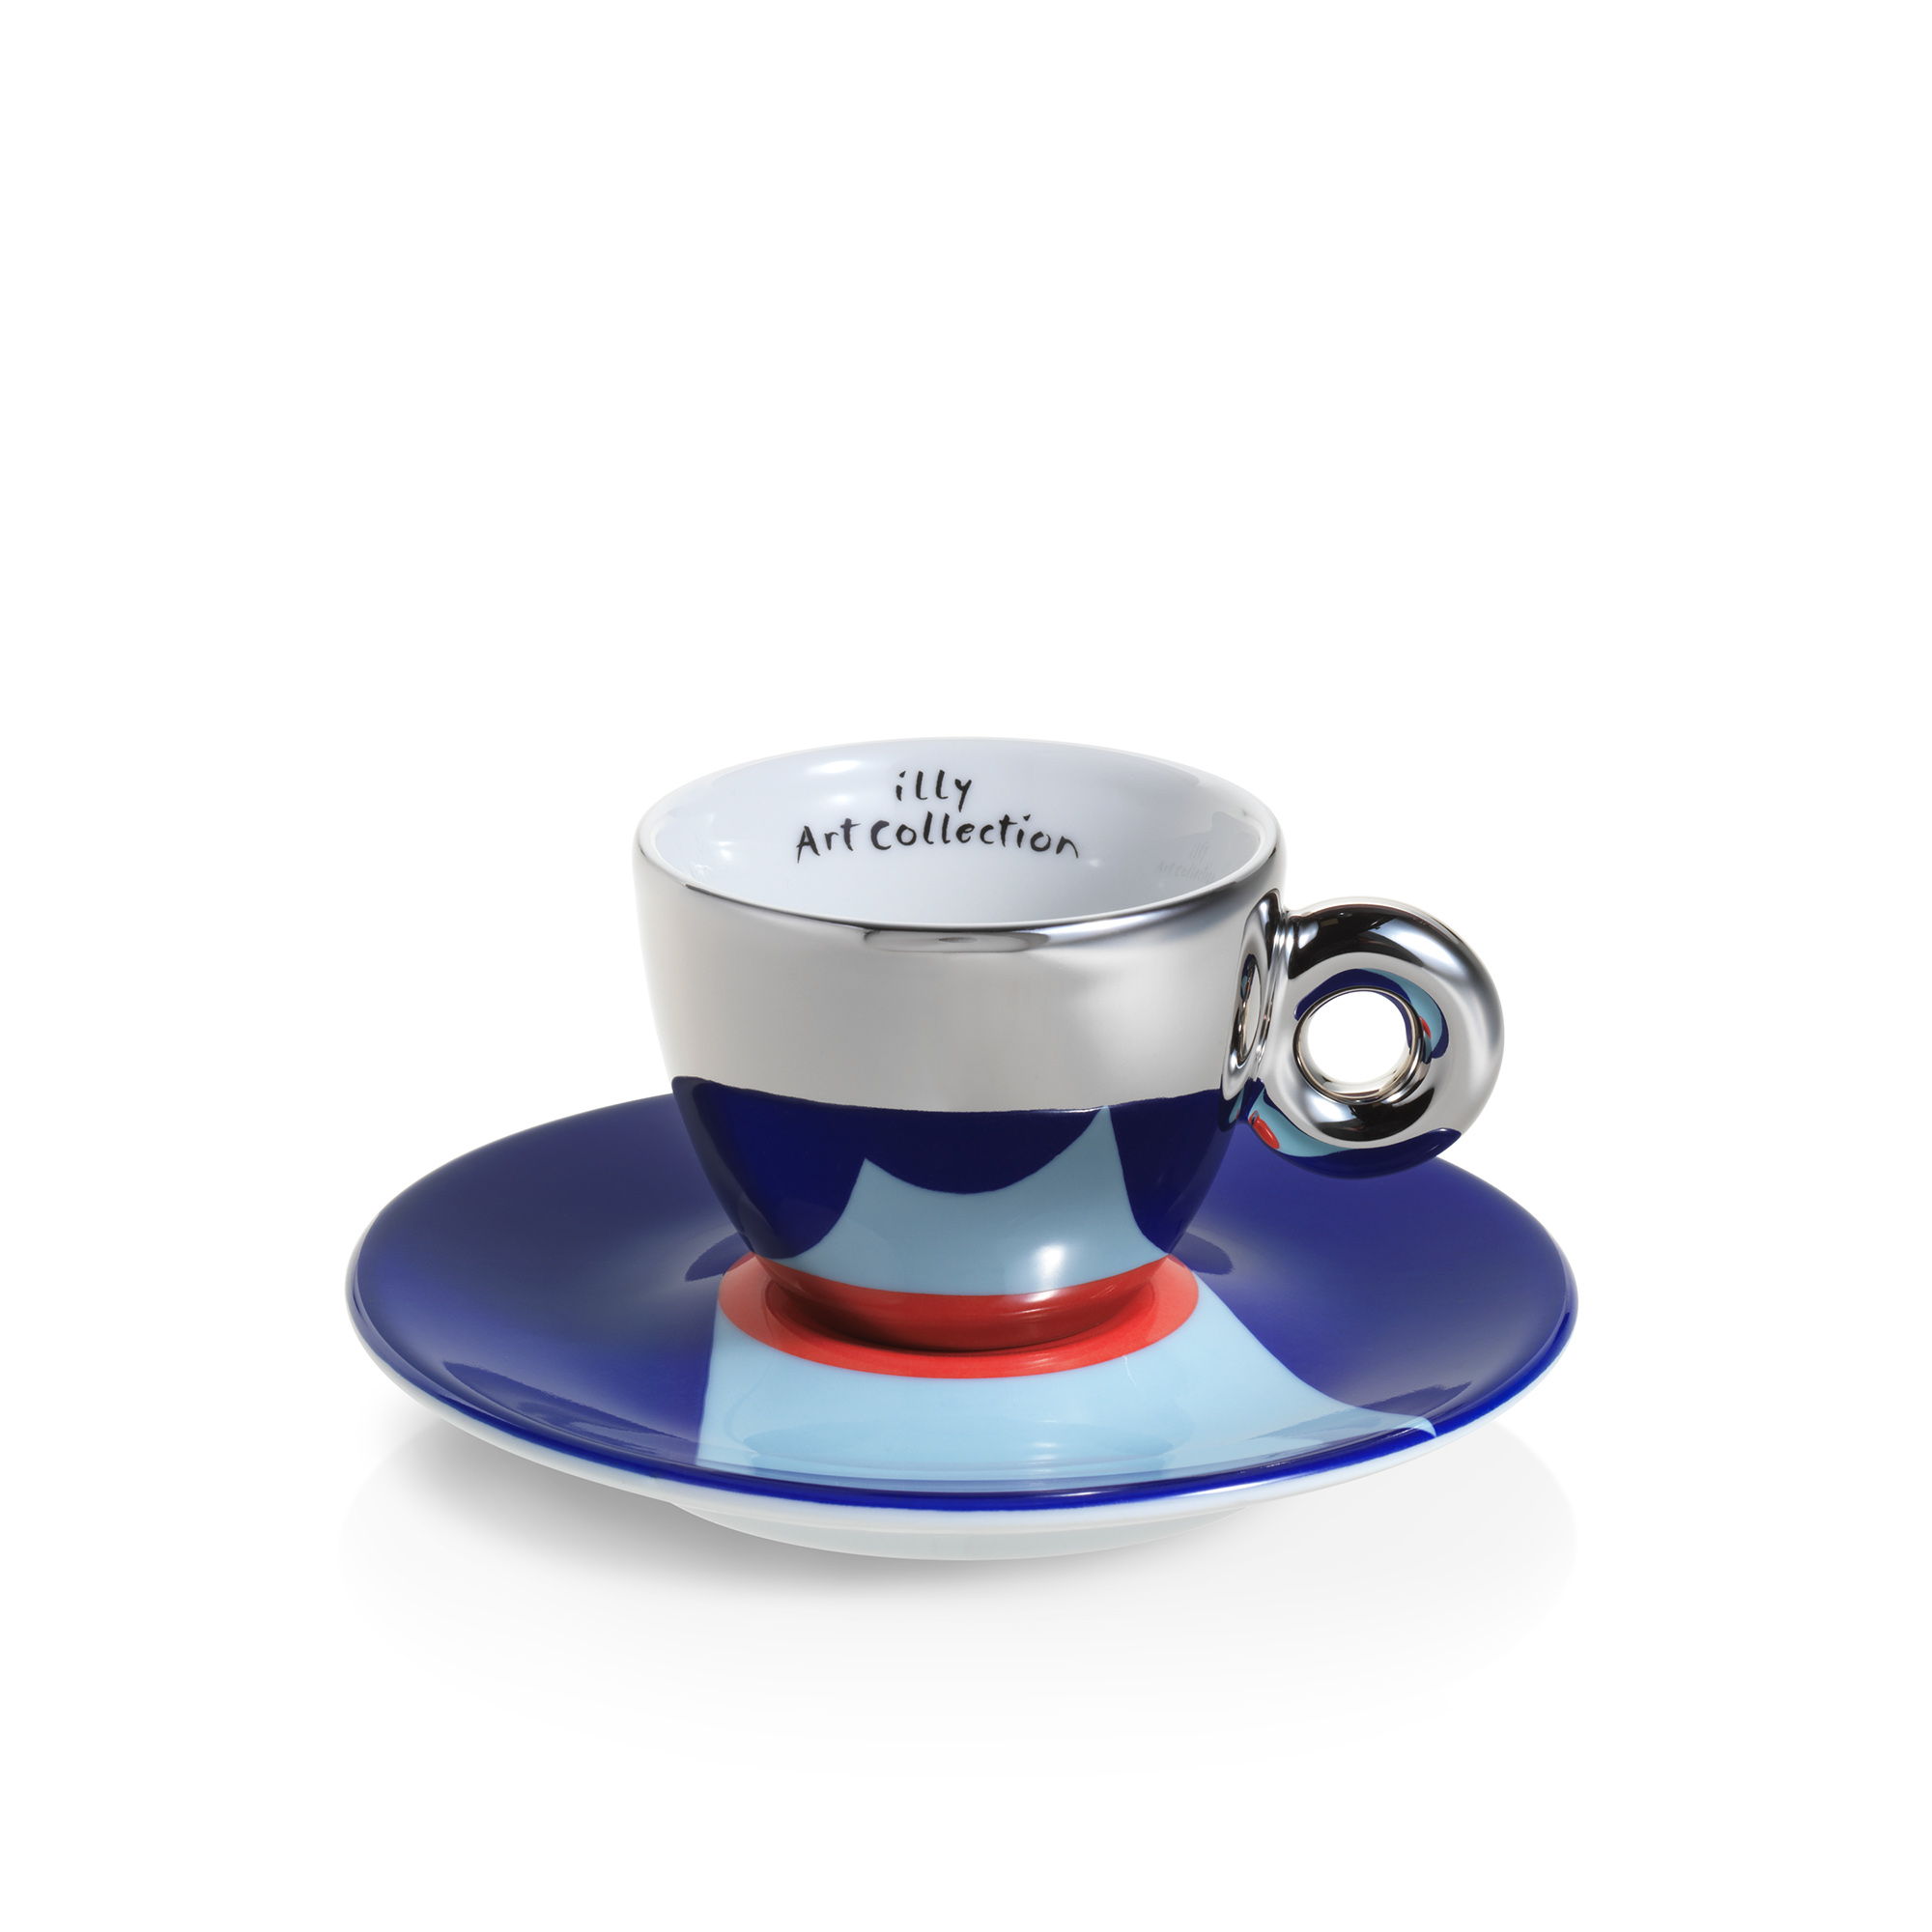 illy Art Collection STEFAN SAGMEISTER Σετ Δώρου 2 Espresso Cups, Φλιτζάνια , 02-02-6060